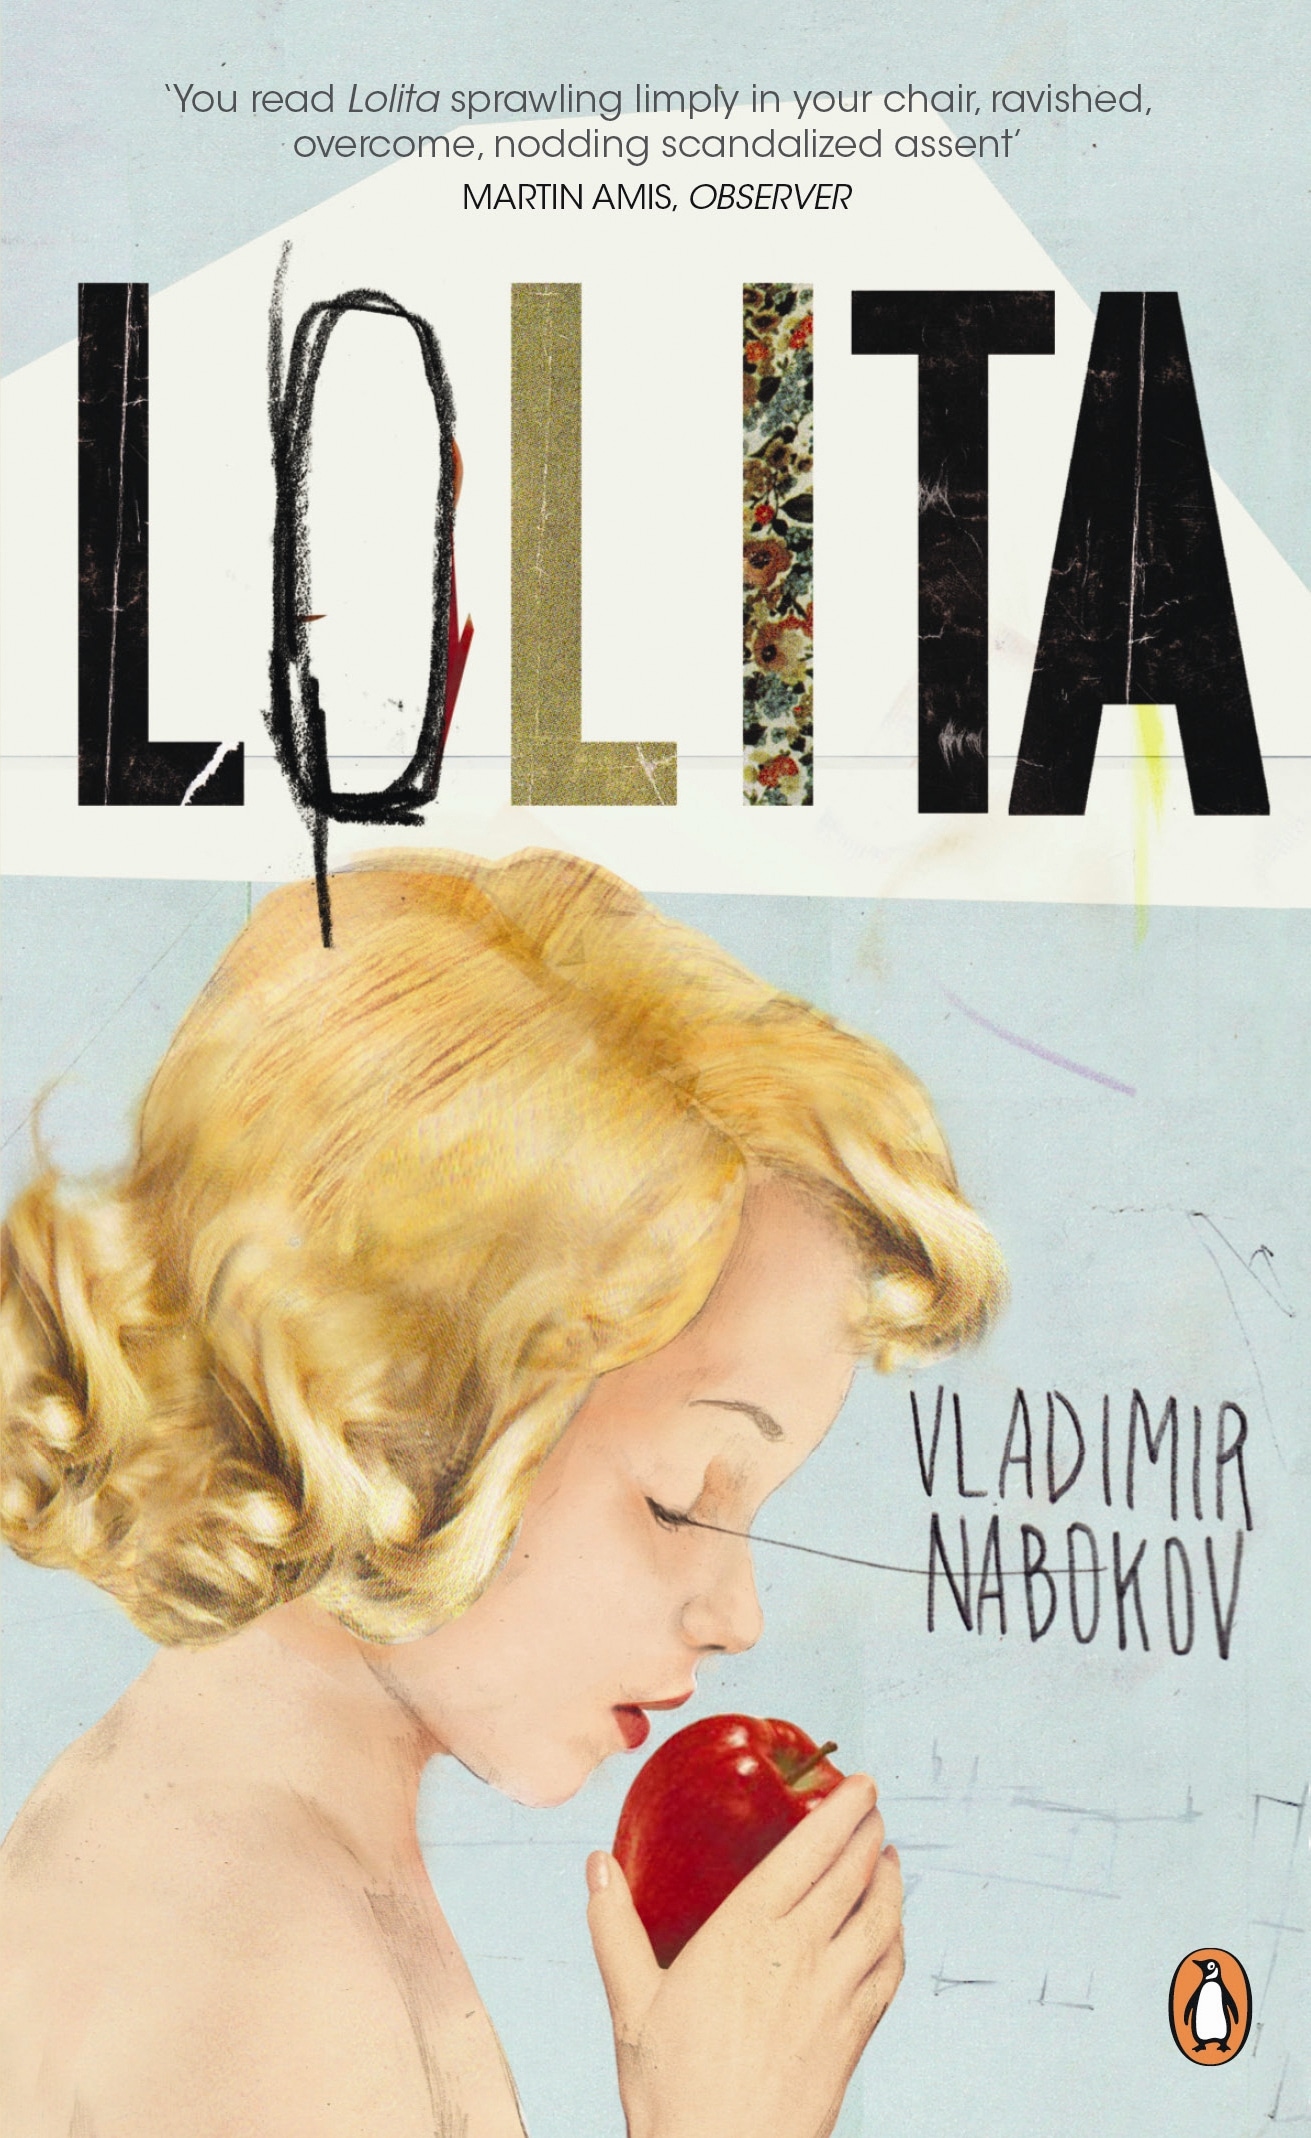 Book “Lolita” by Vladimir Nabokov — April 7, 2011